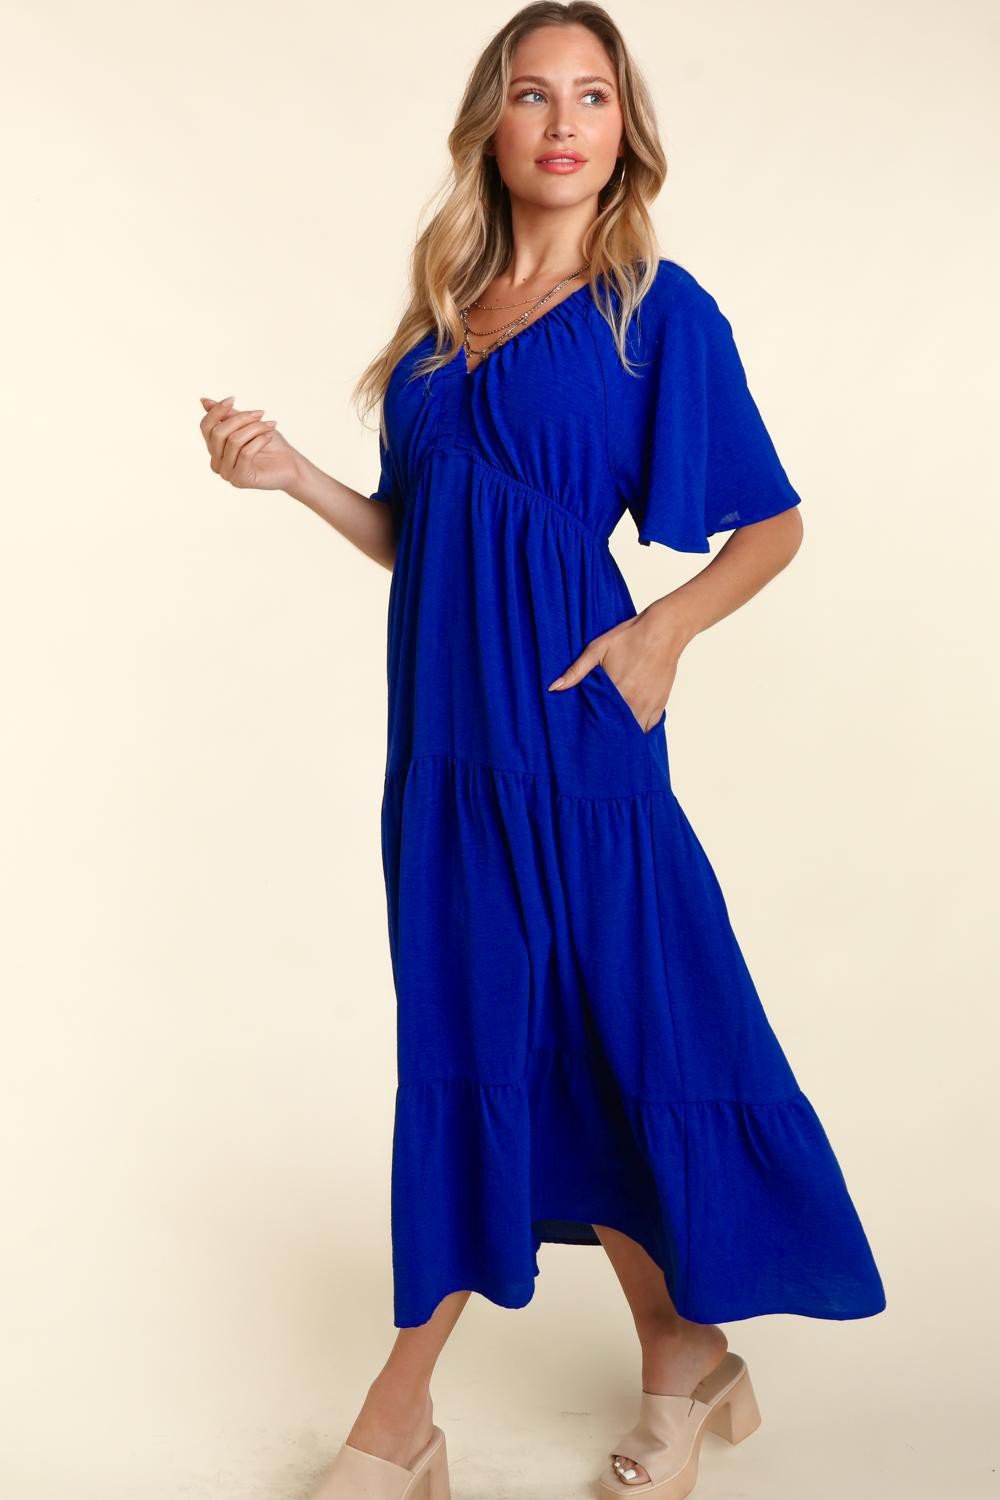 Tiered Babydoll Maxi Dress with Pockets in Royal BlueMaxi DressHaptics